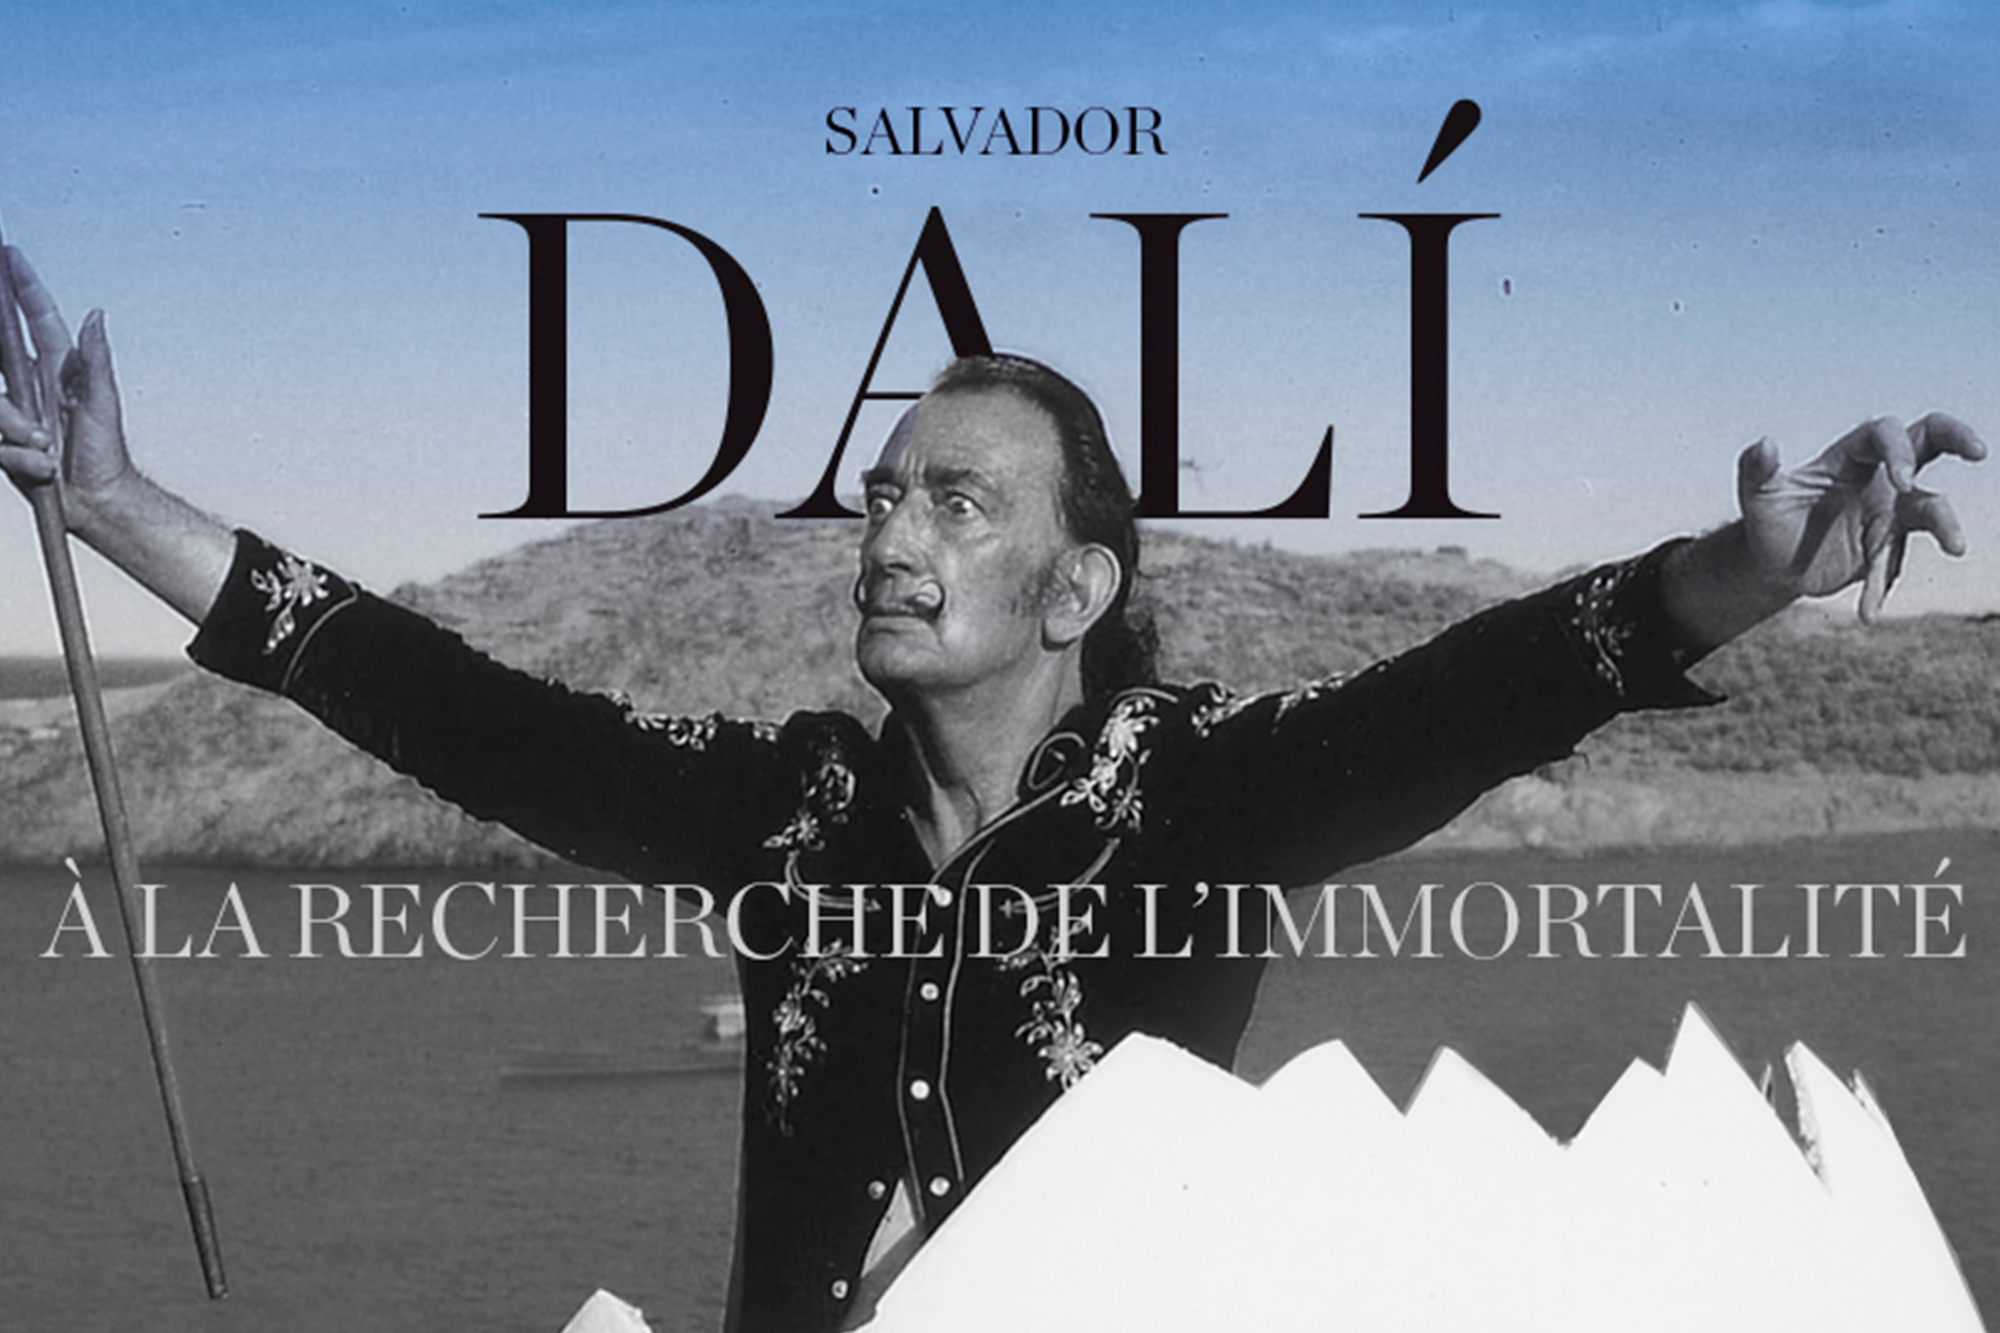 Salvador Dalí version française